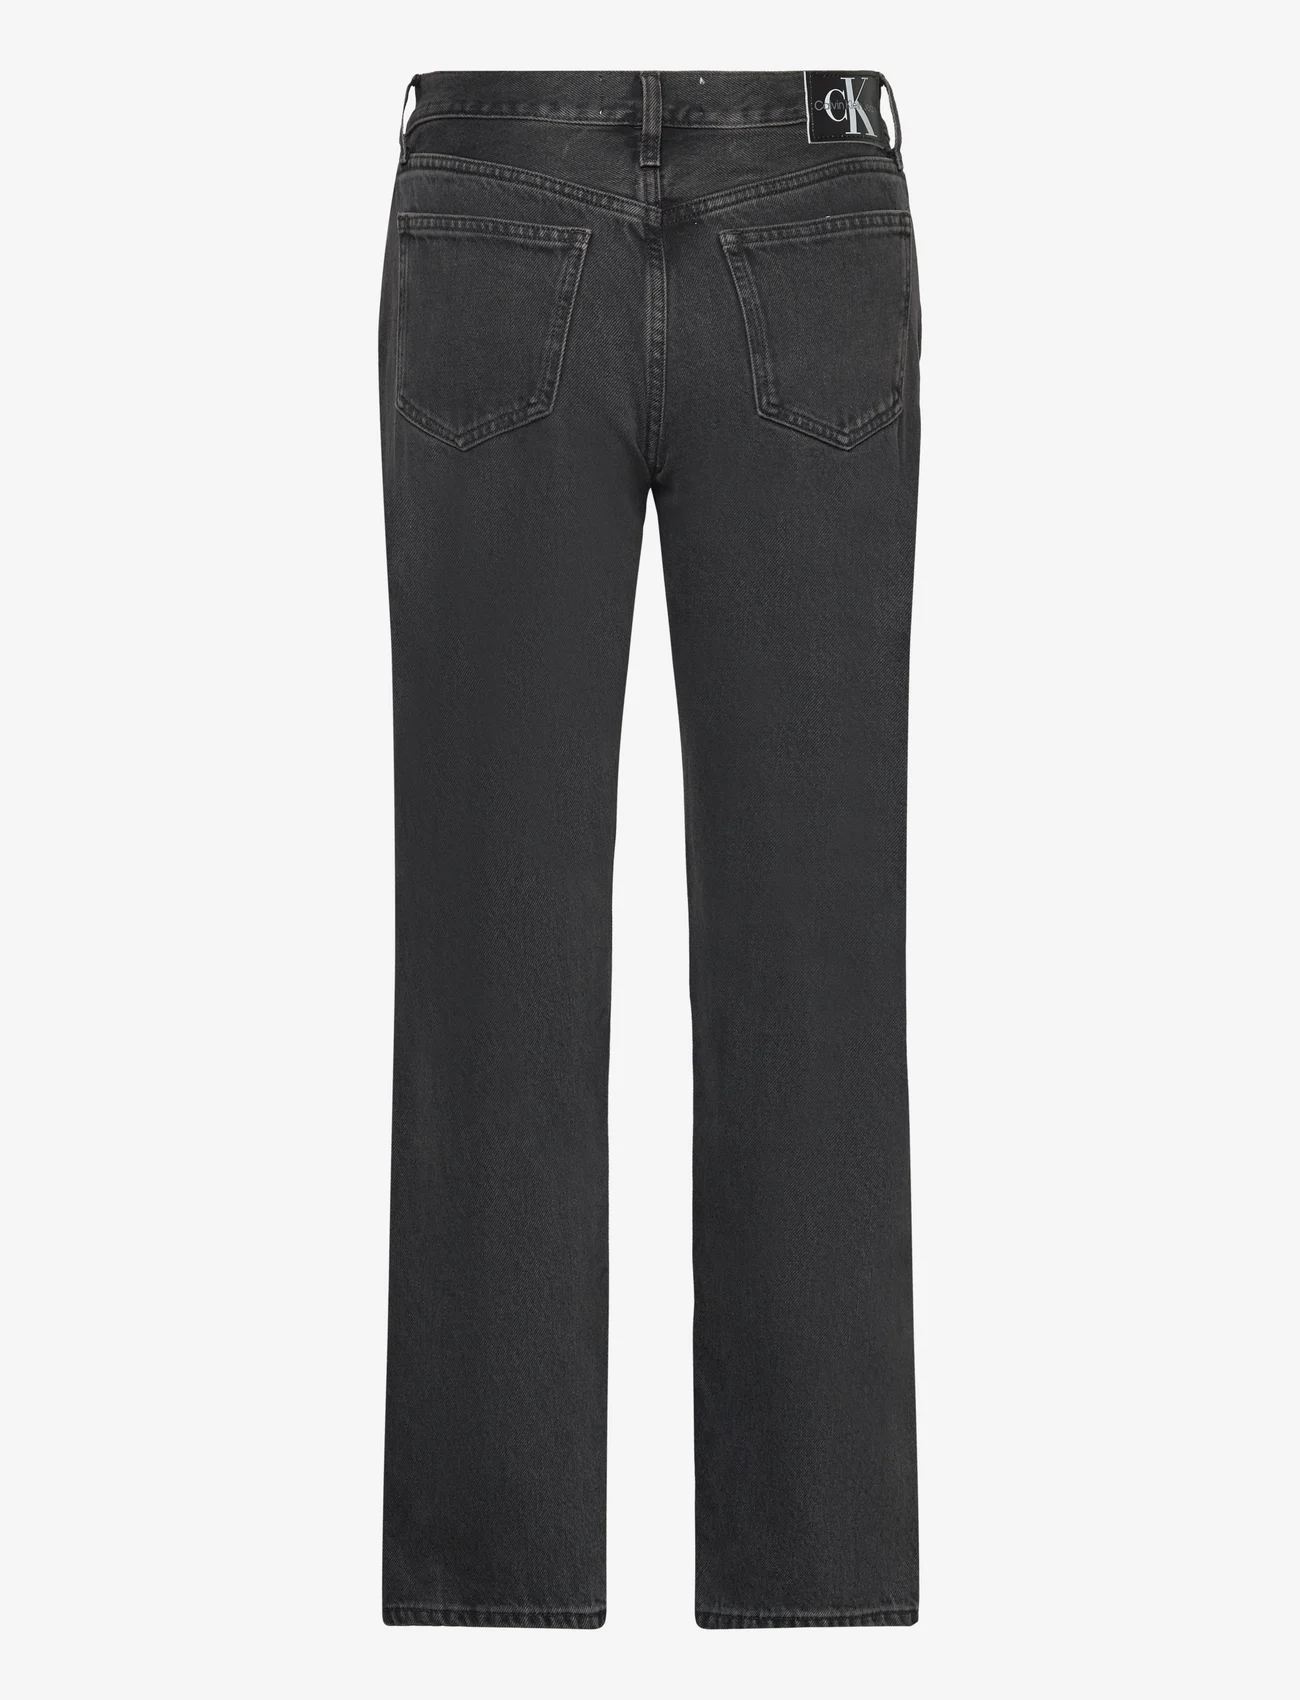 Calvin Klein Jeans - LOW RISE STRAIGHT - straight jeans - denim black - 1